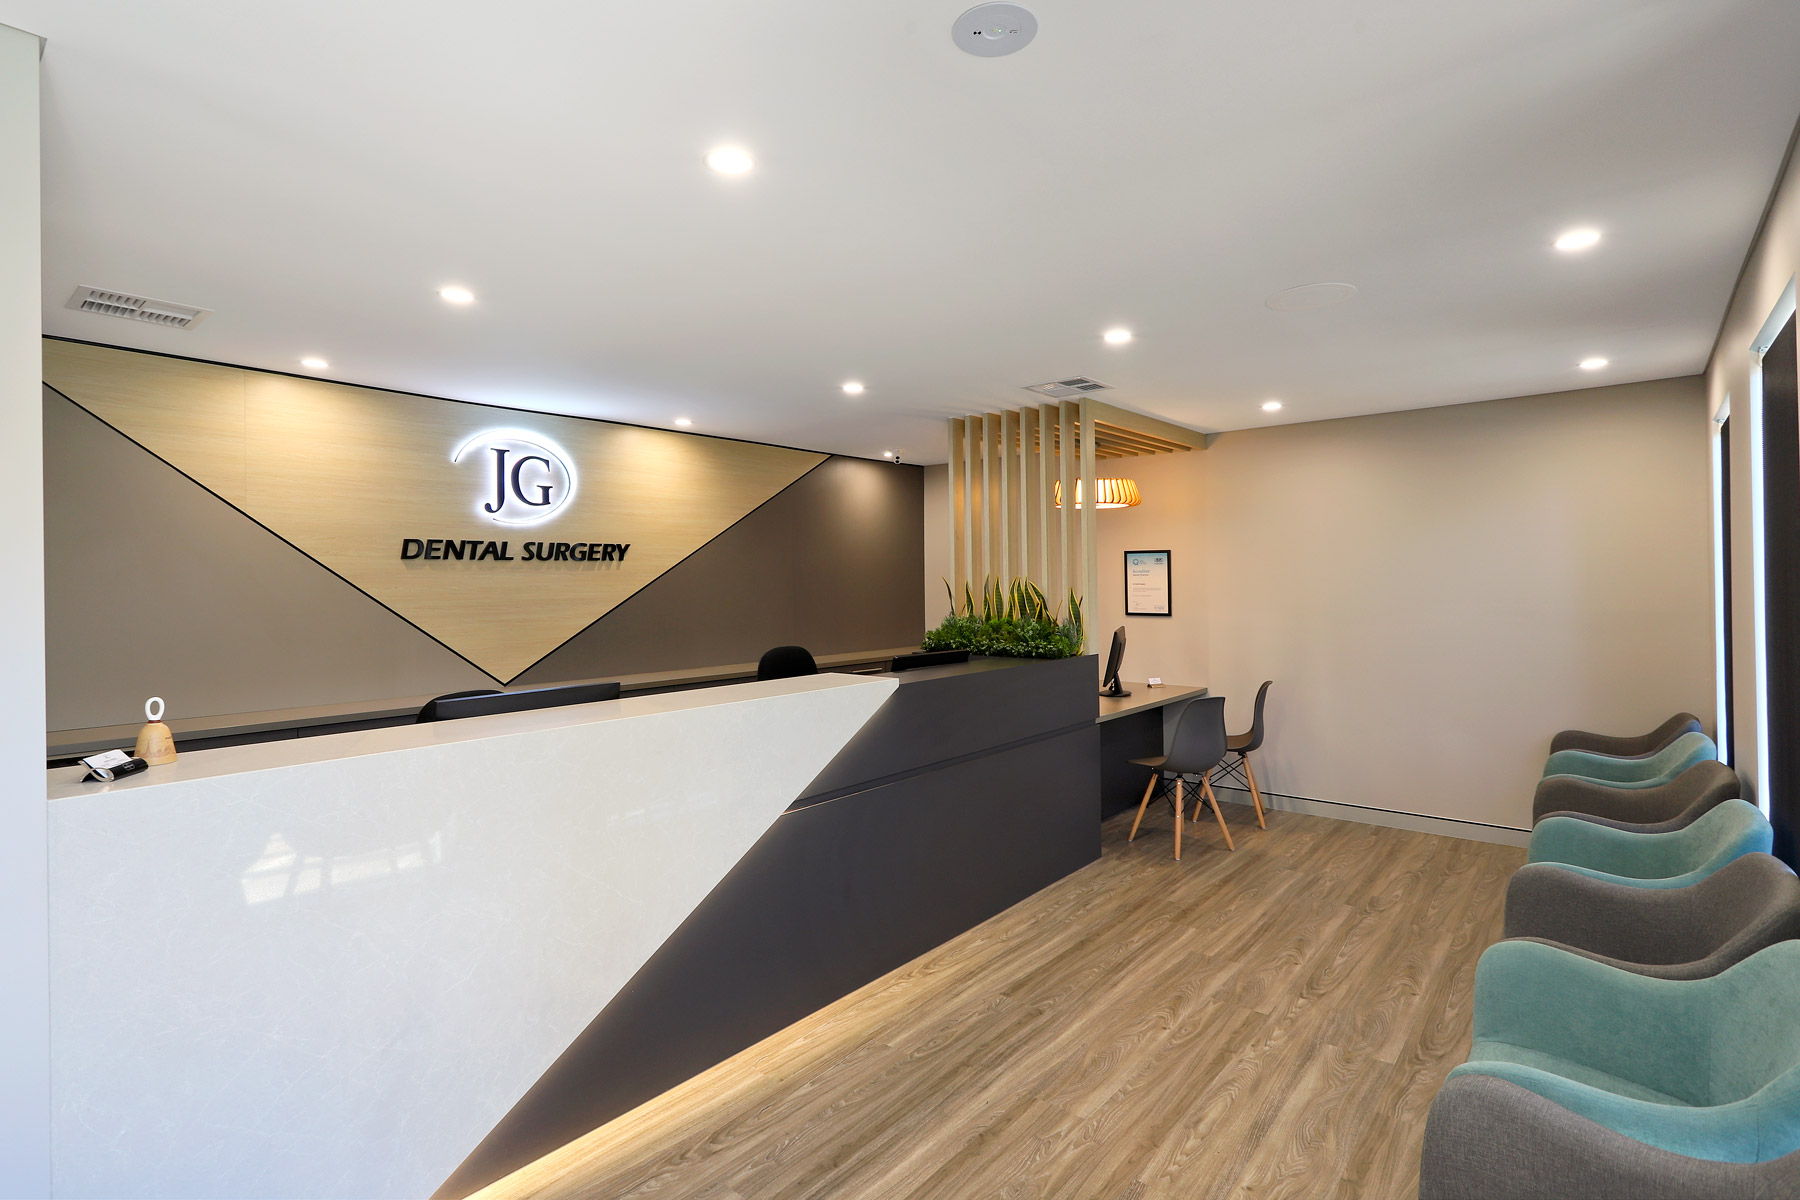 JG Dental reception area